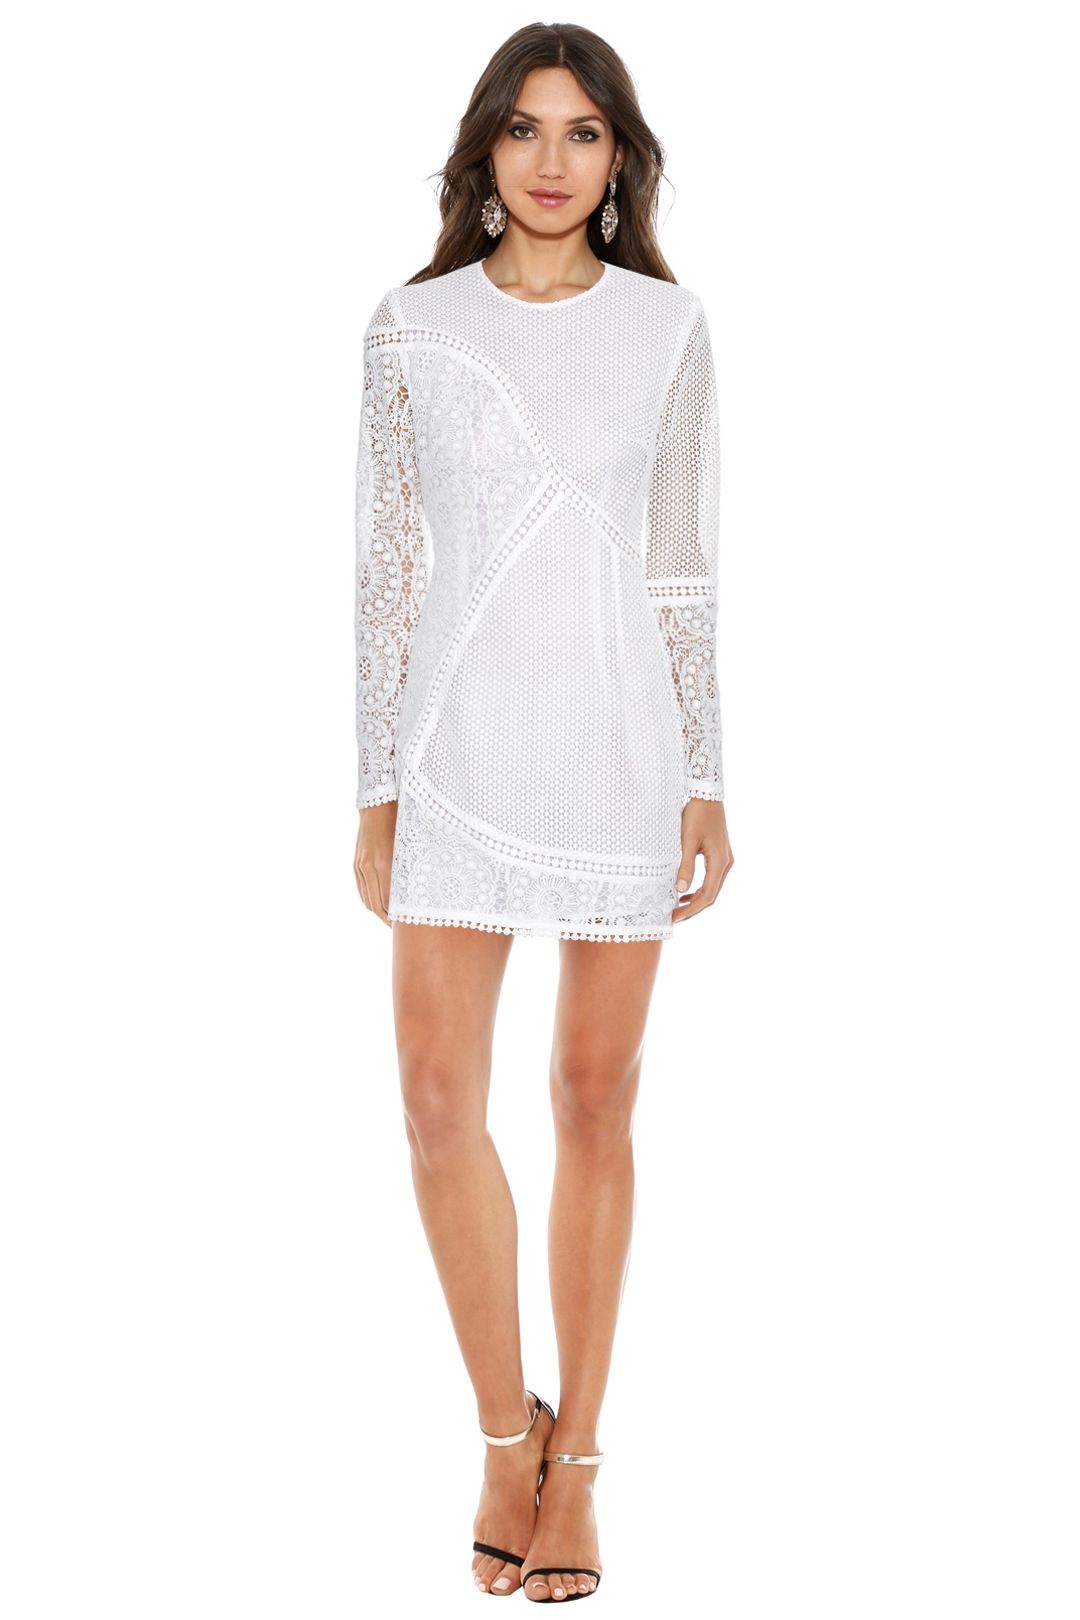 Zimmermann - Anais Lace Dress - White -  Front